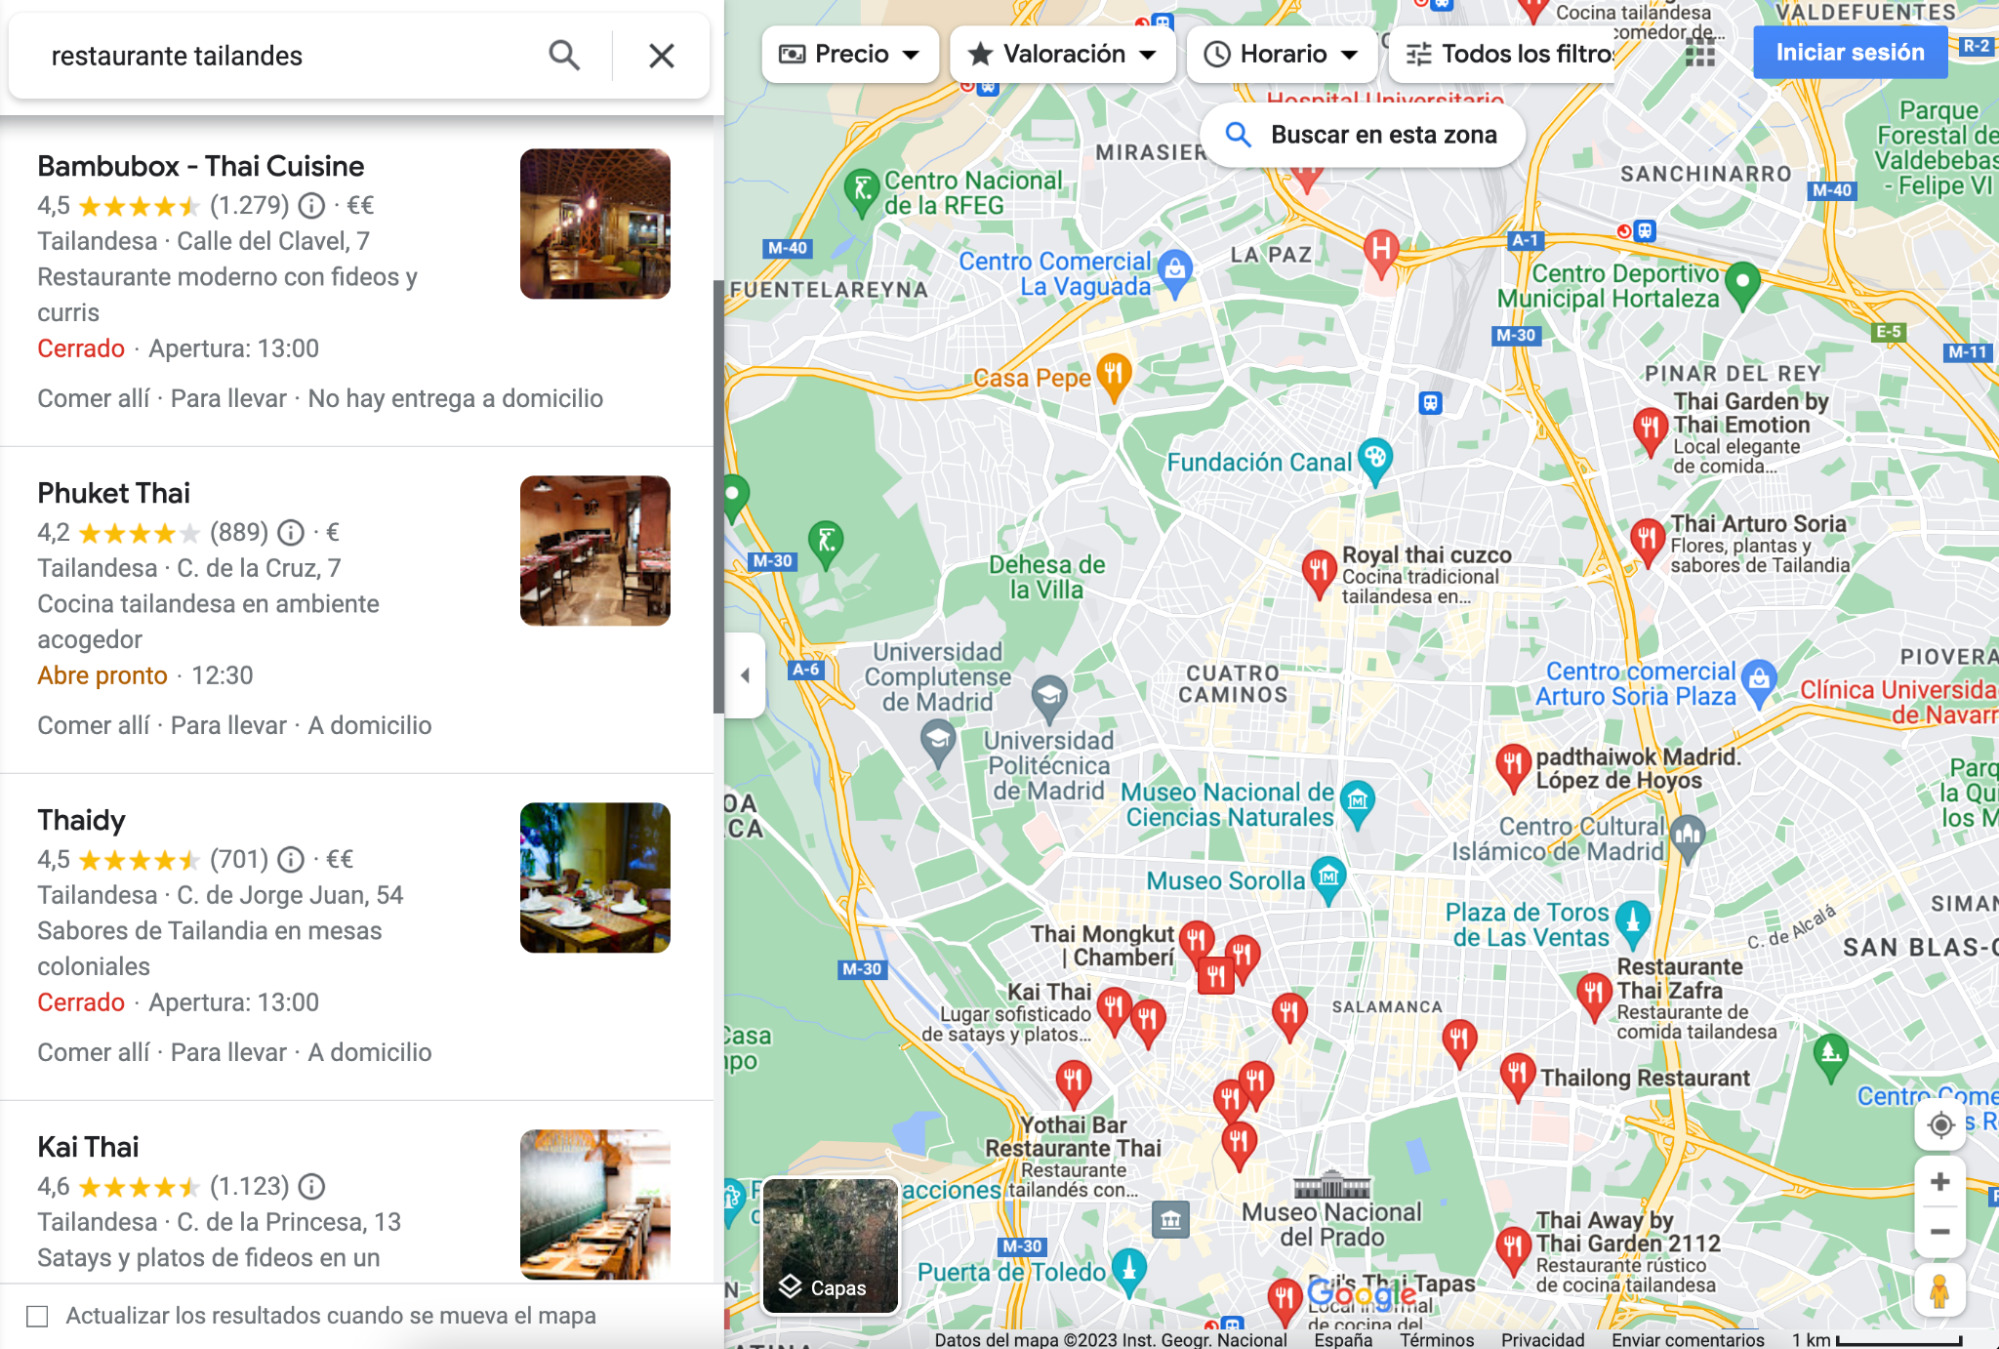 Restaurantes tailandeses en Google Maps.